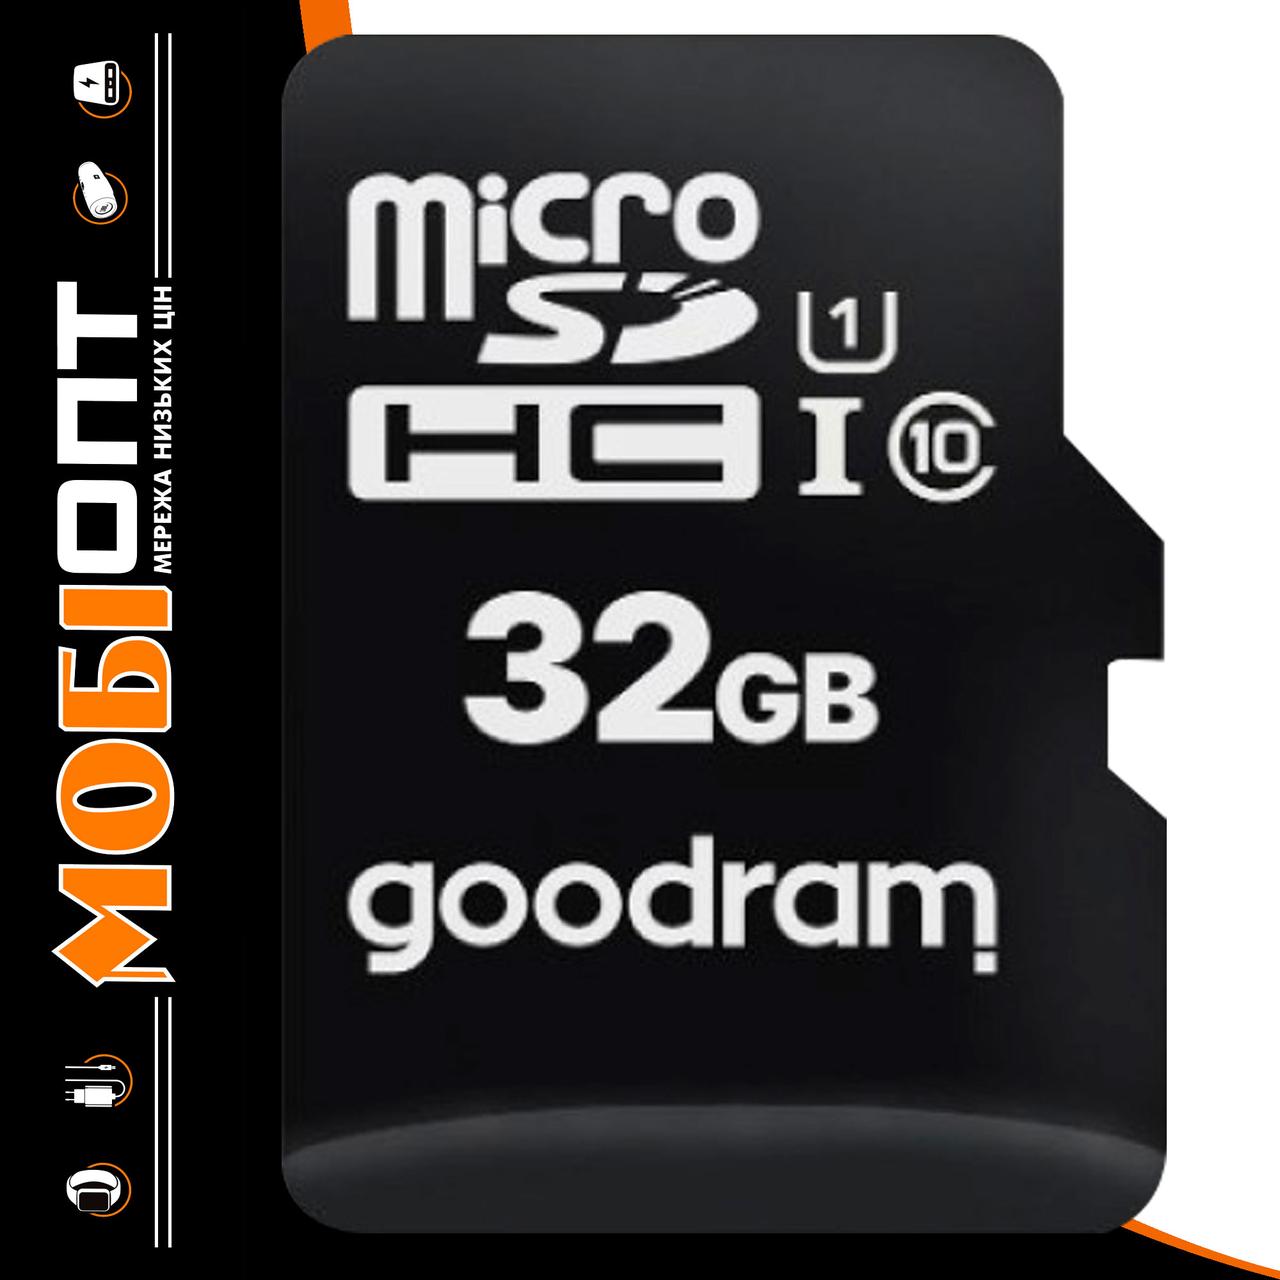 Micro SD 32GB/10 class Good Ram